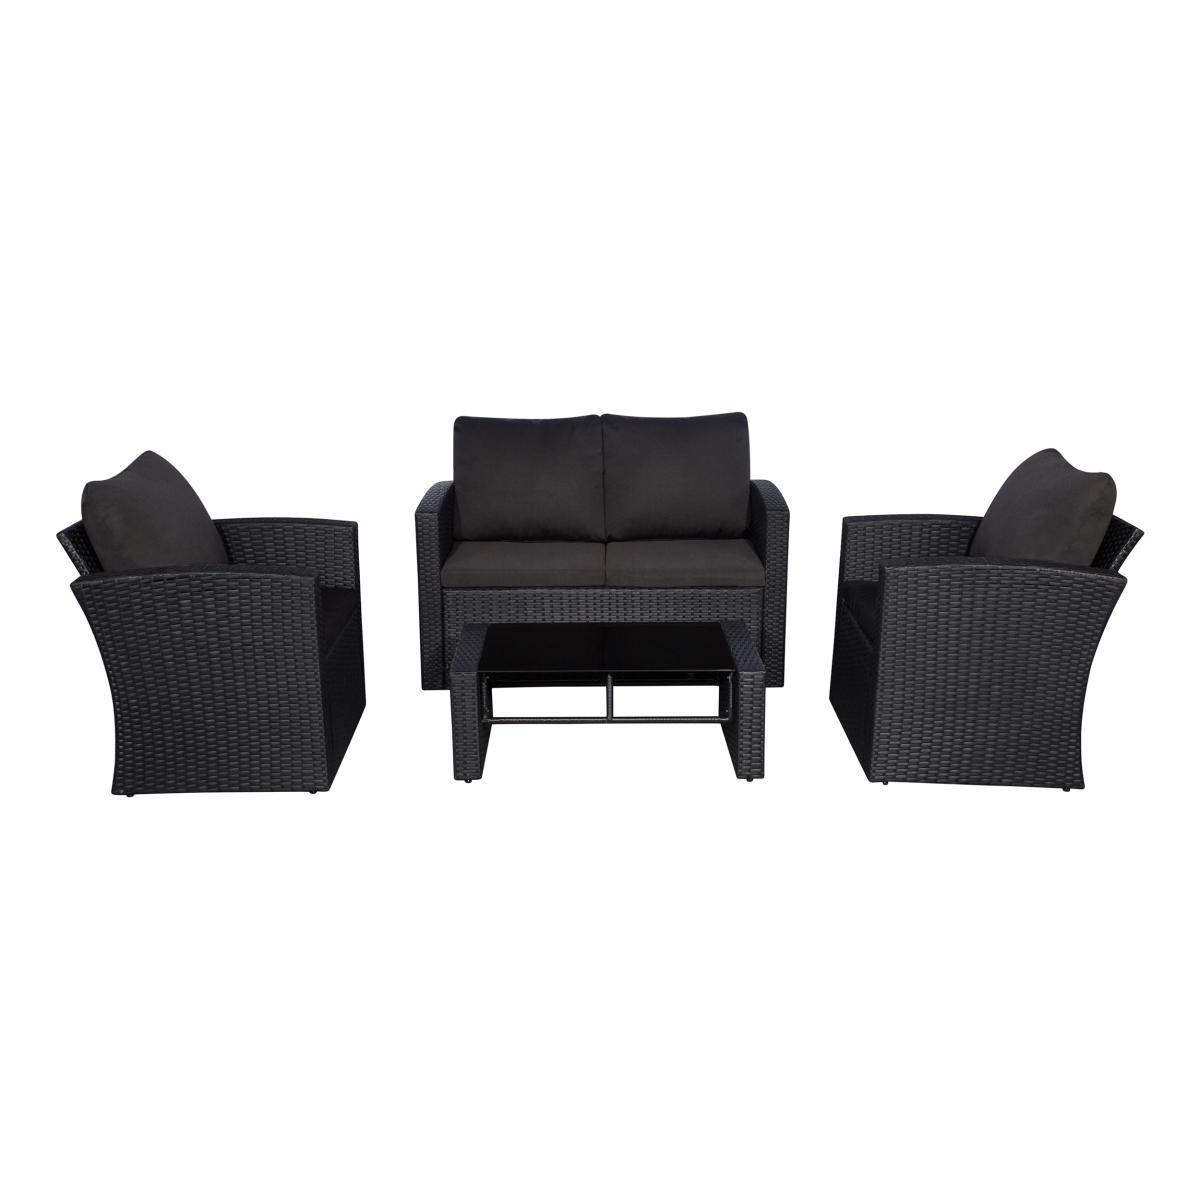 P151-02 Conversation Sofa Set With Plush Cushions, Black - 4 Piece